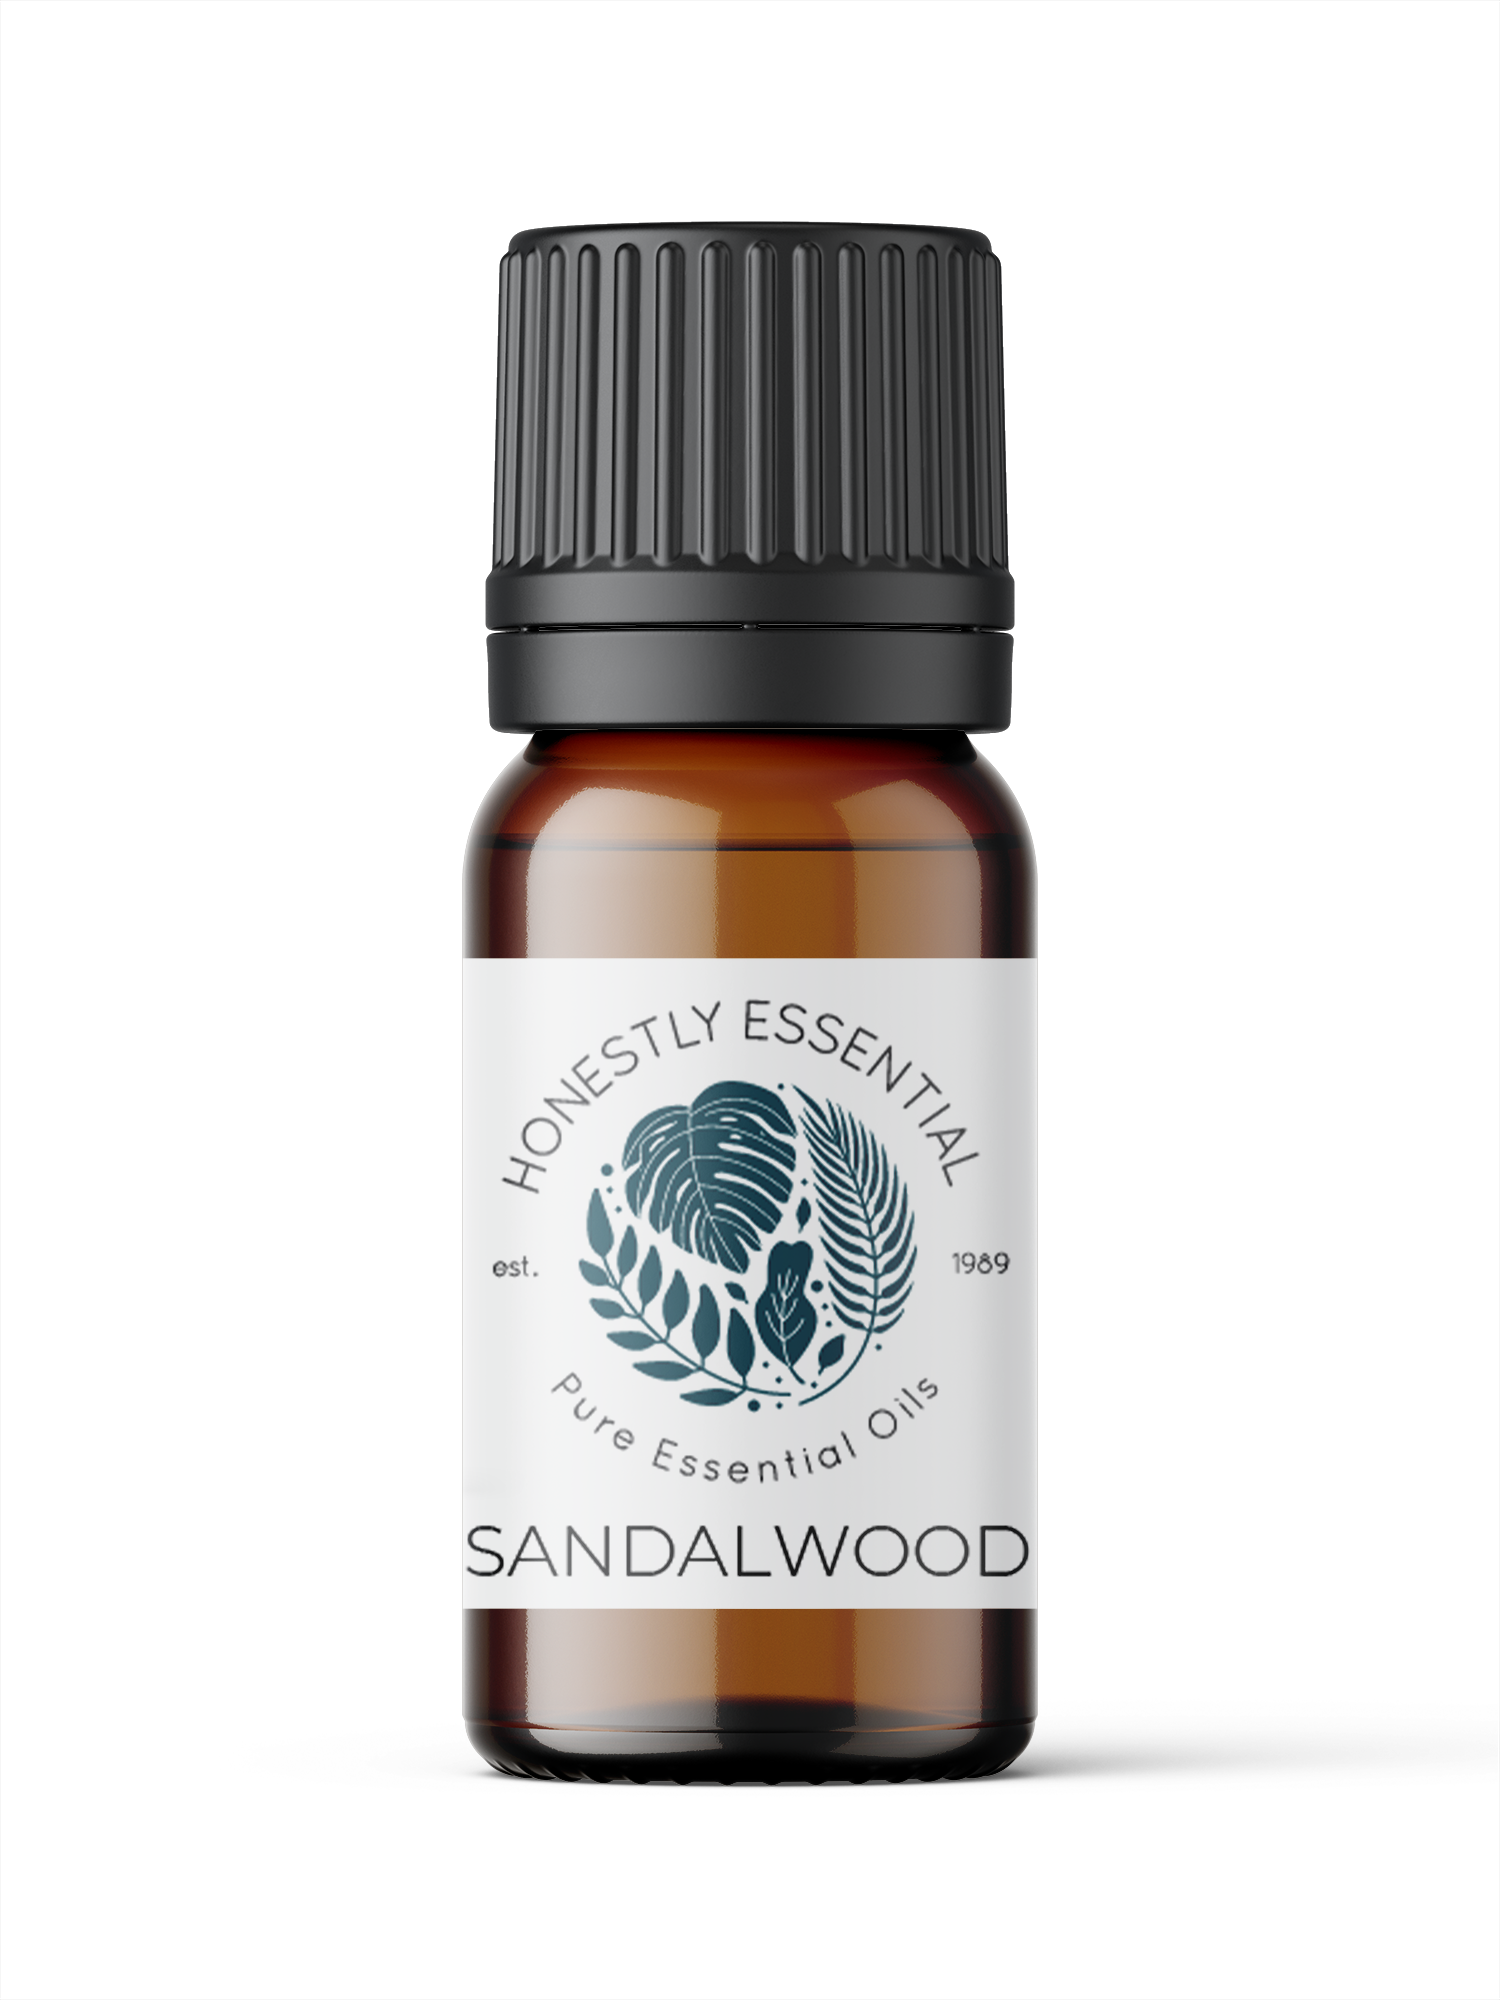 Sandalwood Essential Oil - Essential Oils | Honestly Essential Oils anxiety, bruising, child, depression, essential, kid, kid safe, oil, organic, safe, sandalwood, skin, skin health, sores, t